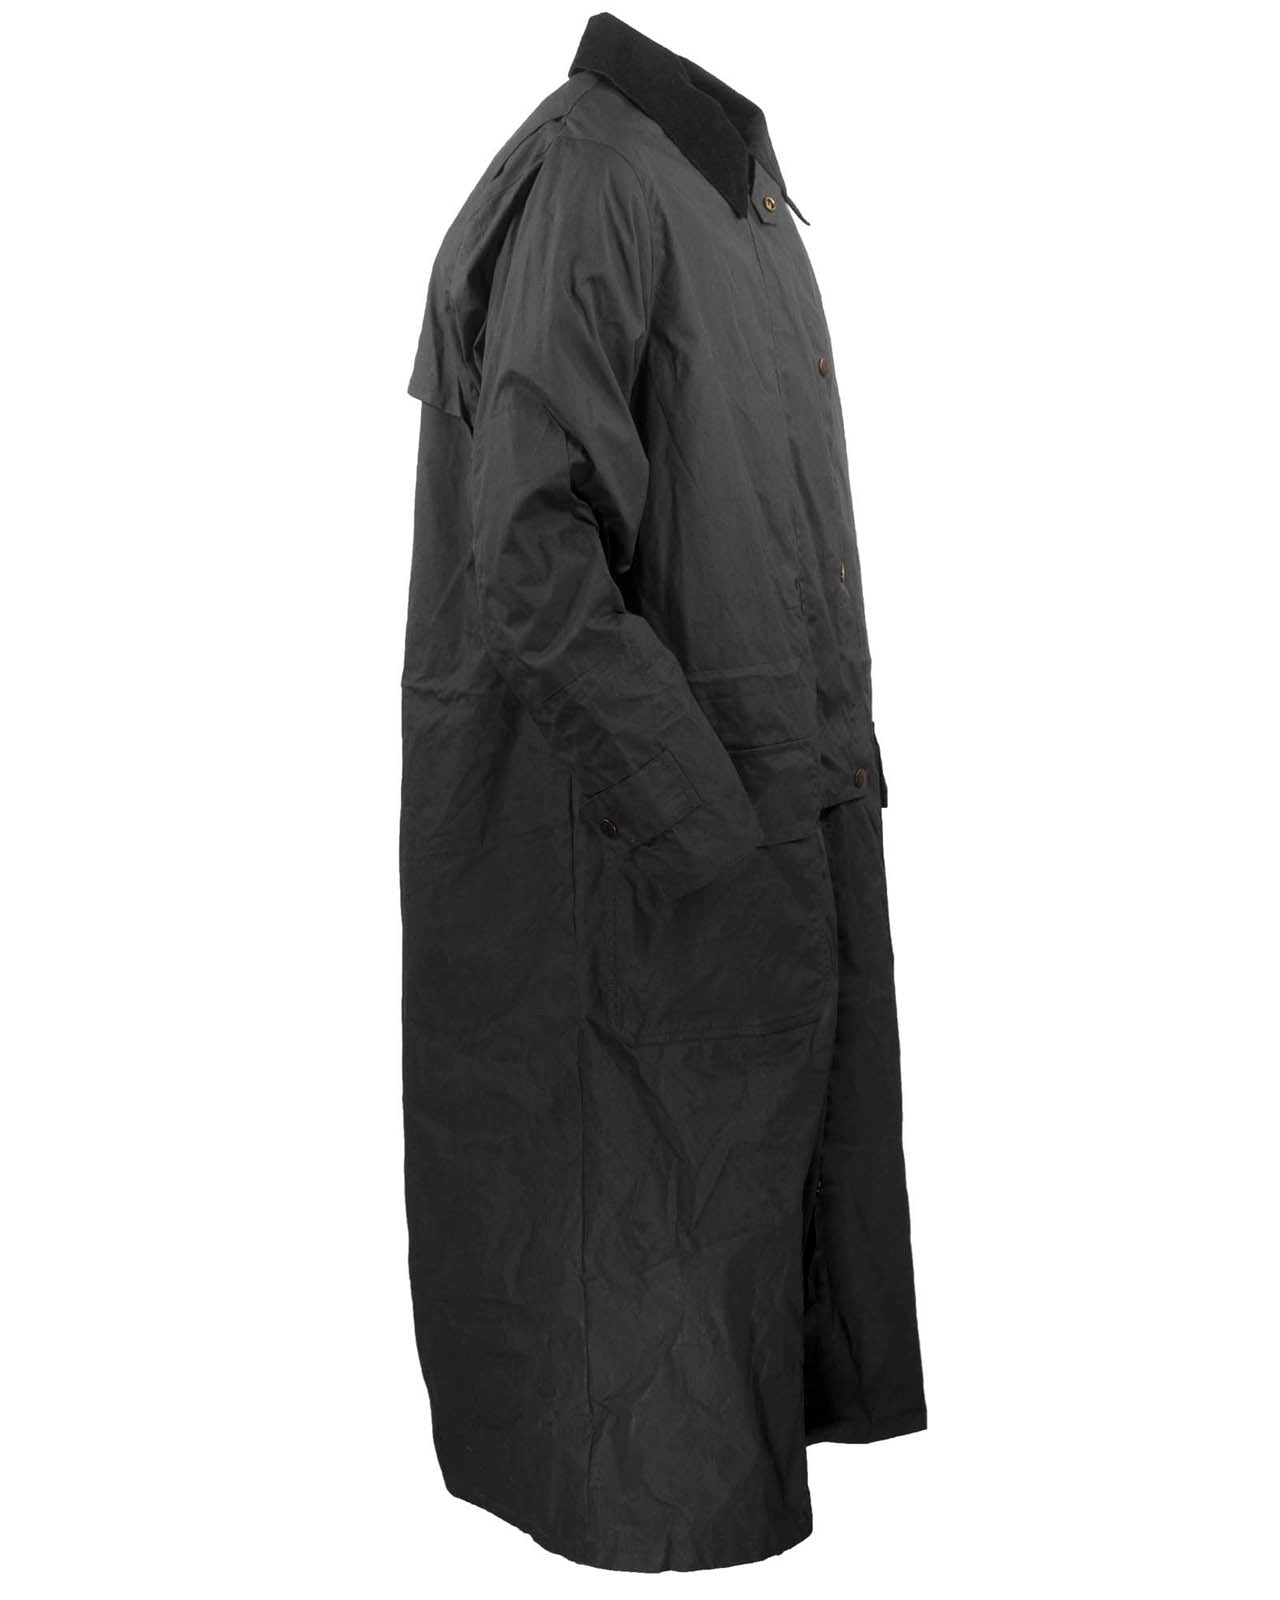 Men's Wax Cotton Duster Coat – OutbackTrading.com